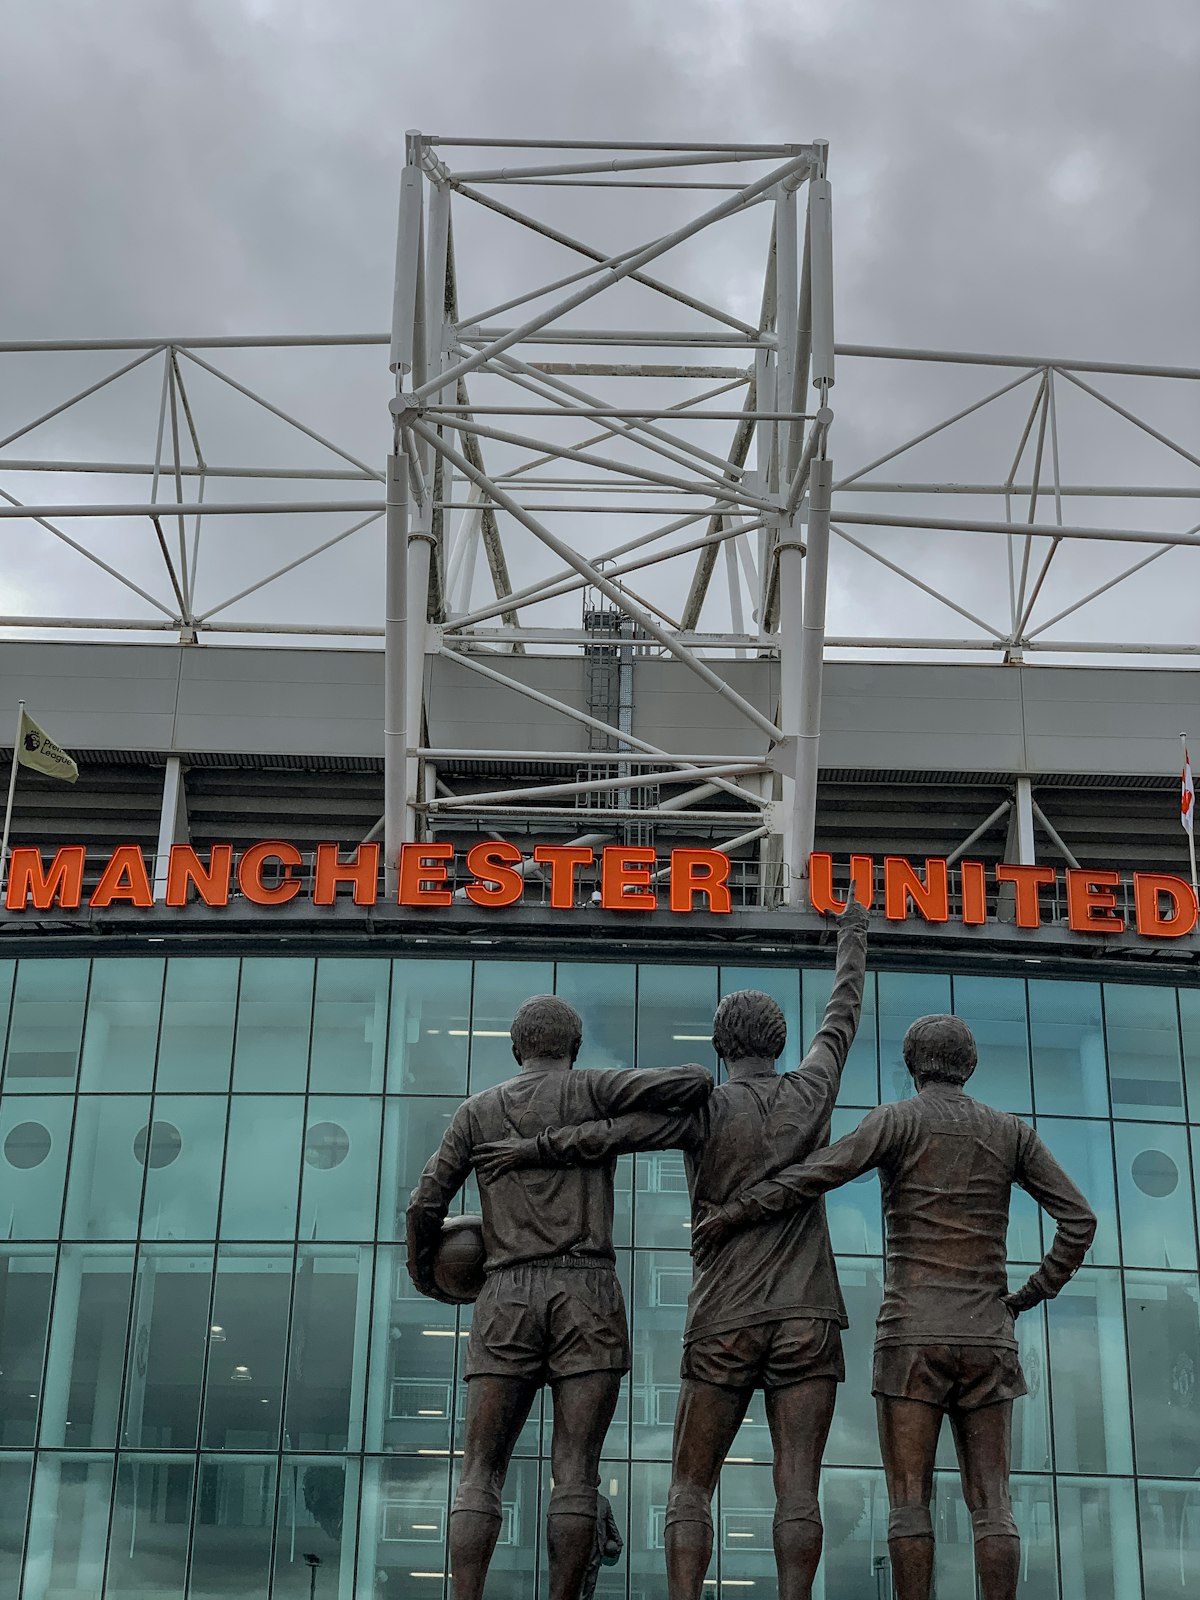 Major Overhaul Expected at Manchester United: Ten Hag's Ambitious Plans for Premier League Success